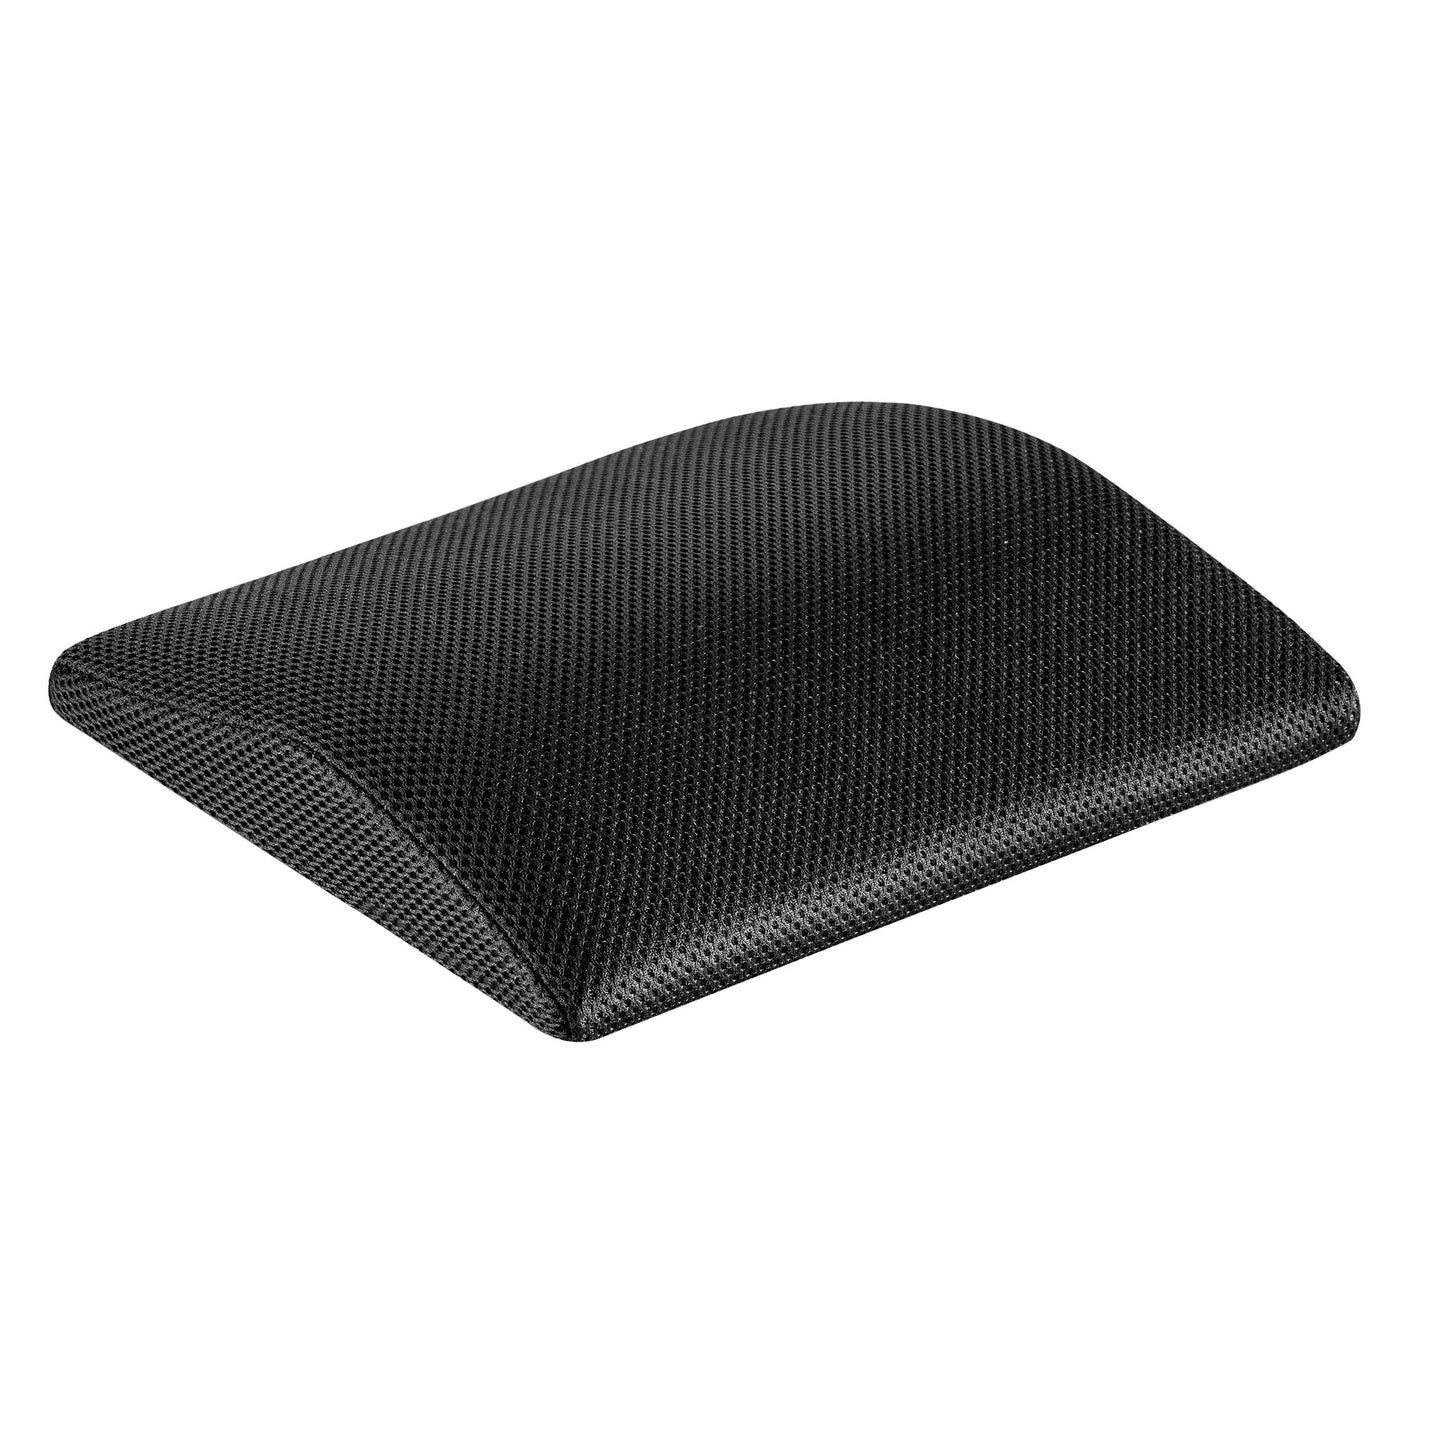 Navaho - Memory Foam Small Size Travel Lumbar Back Support Chair Cushion - Medium Firm